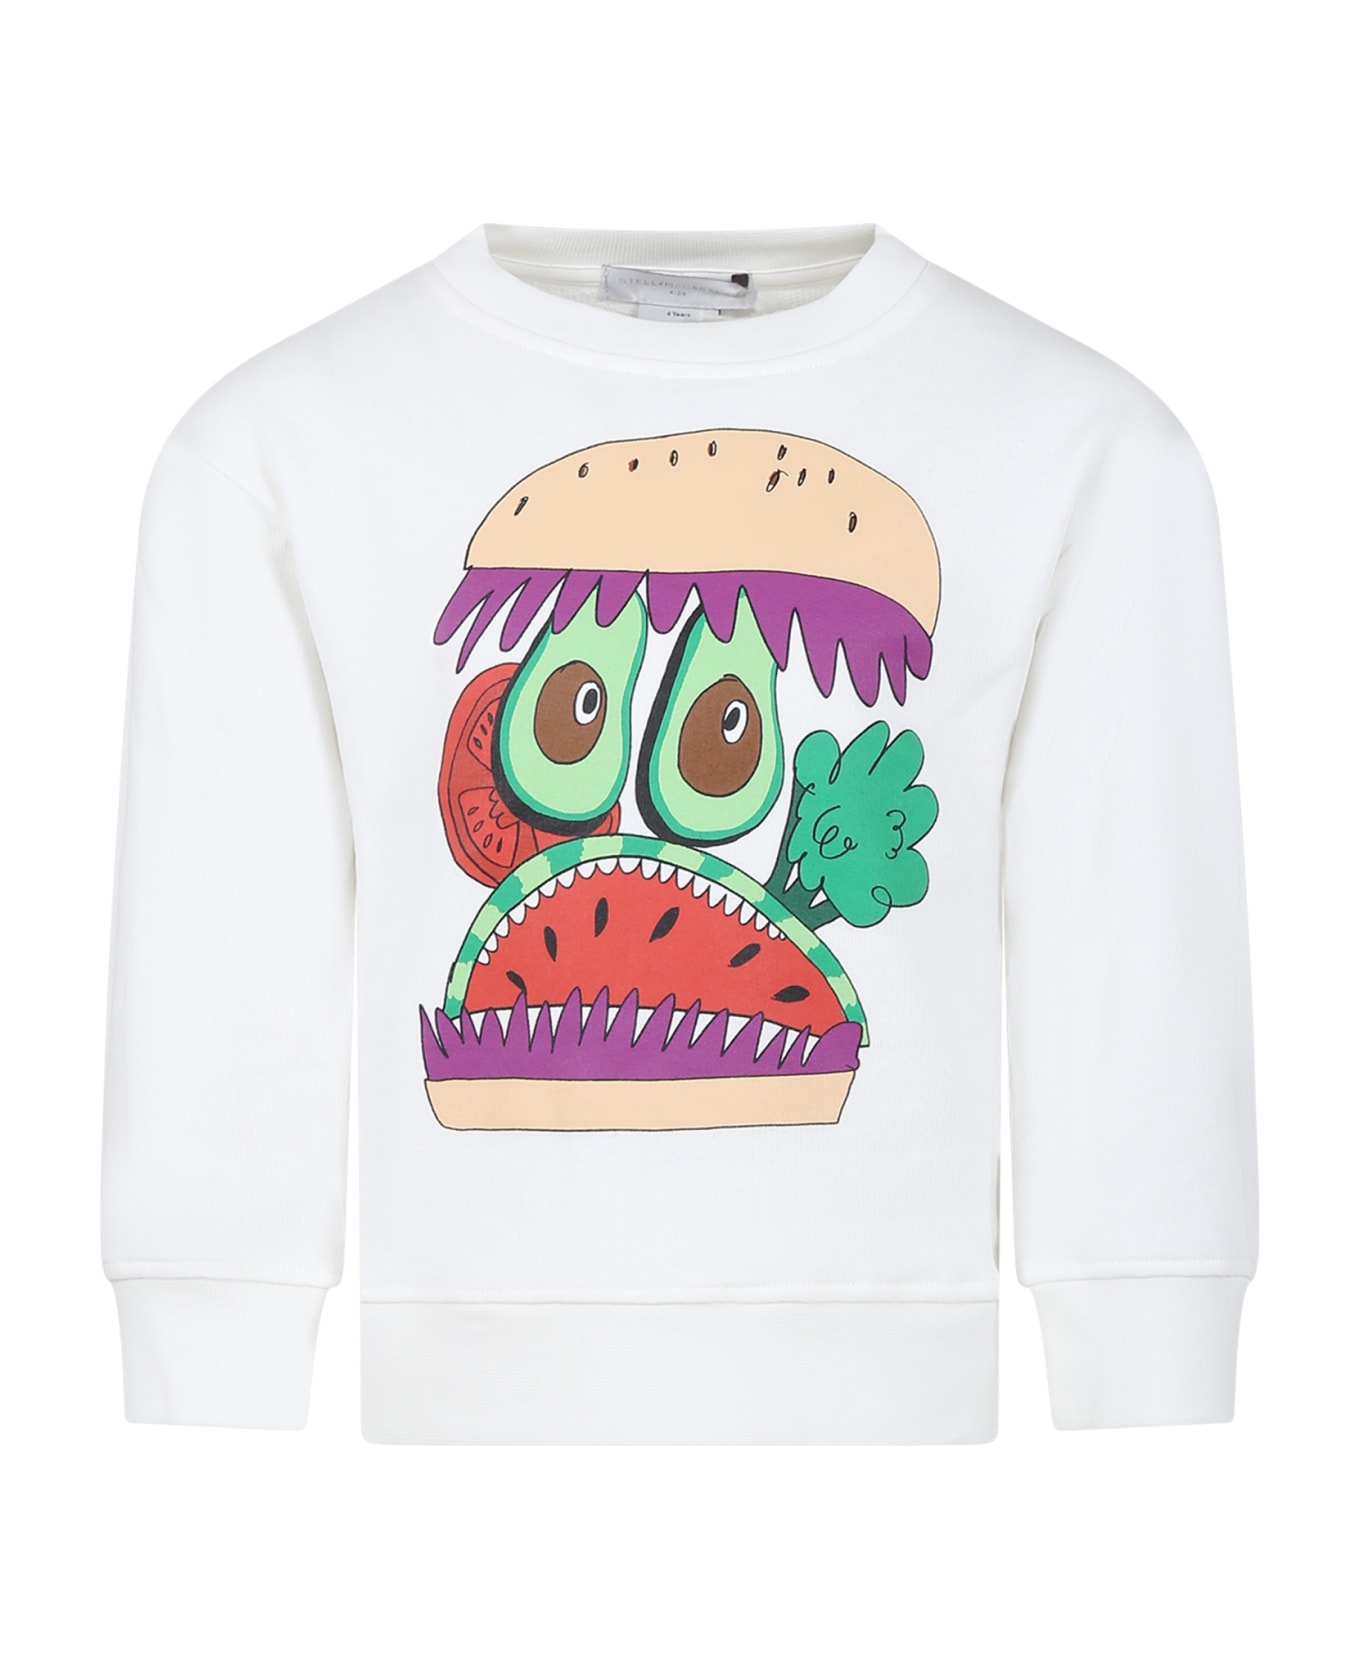 Stella McCartney Kids White Sweatshirt For Boy With Hamburger Print And Writing - White